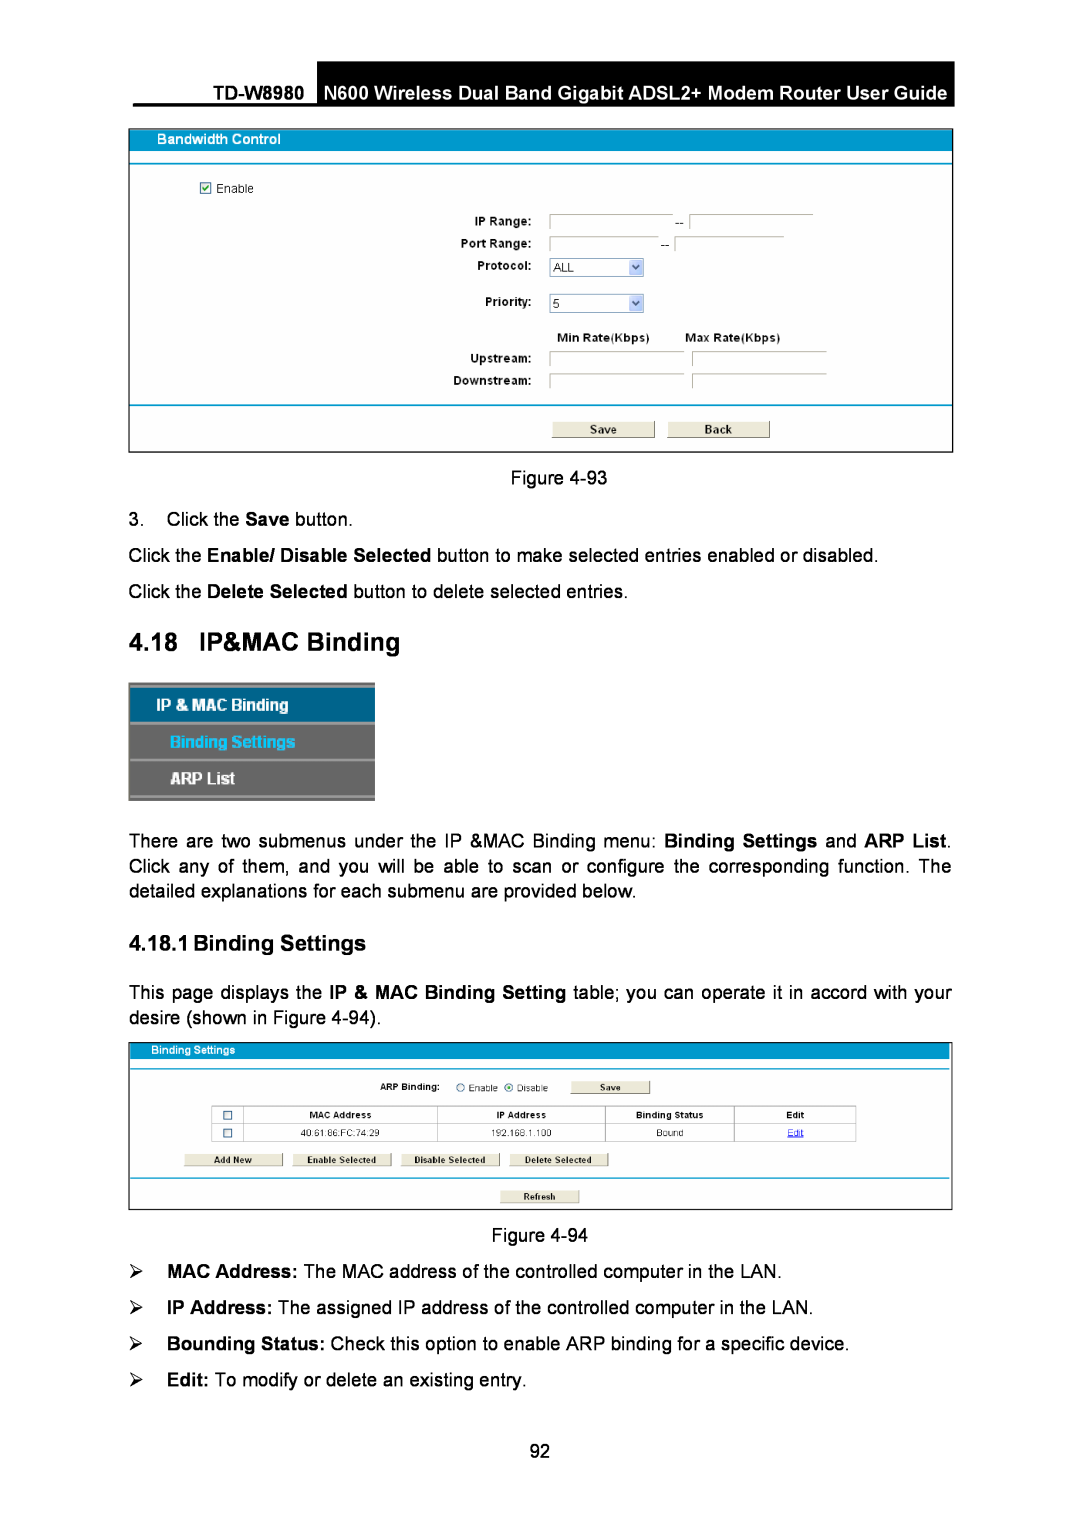 TP-Link TD-W8980 manual 4.18 IP&MAC Binding, Binding Settings 